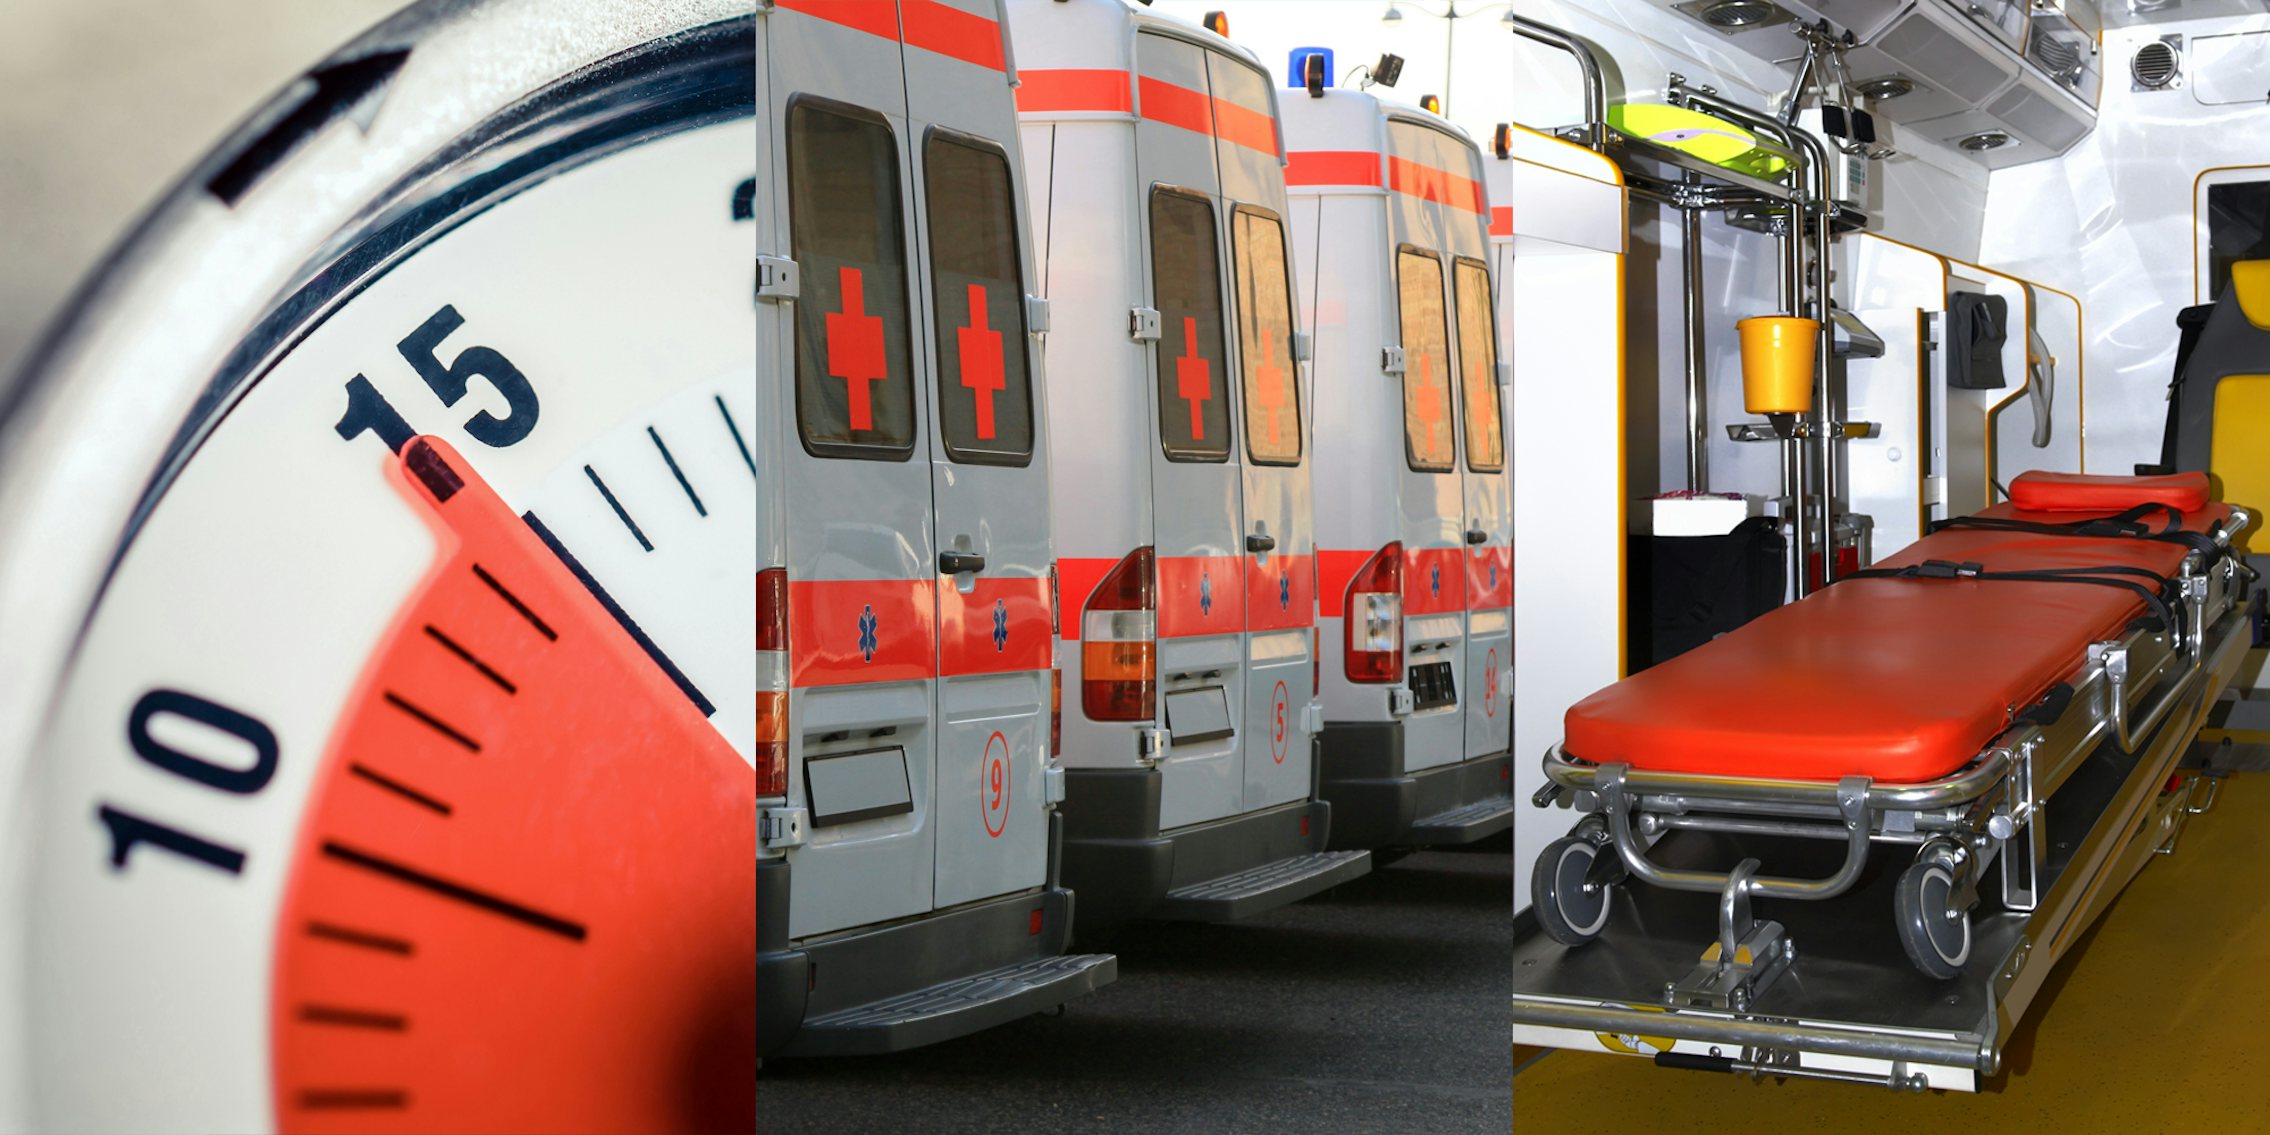 15 minute mark on timer (l) ambulances lined up (c) ambulance interior (r)